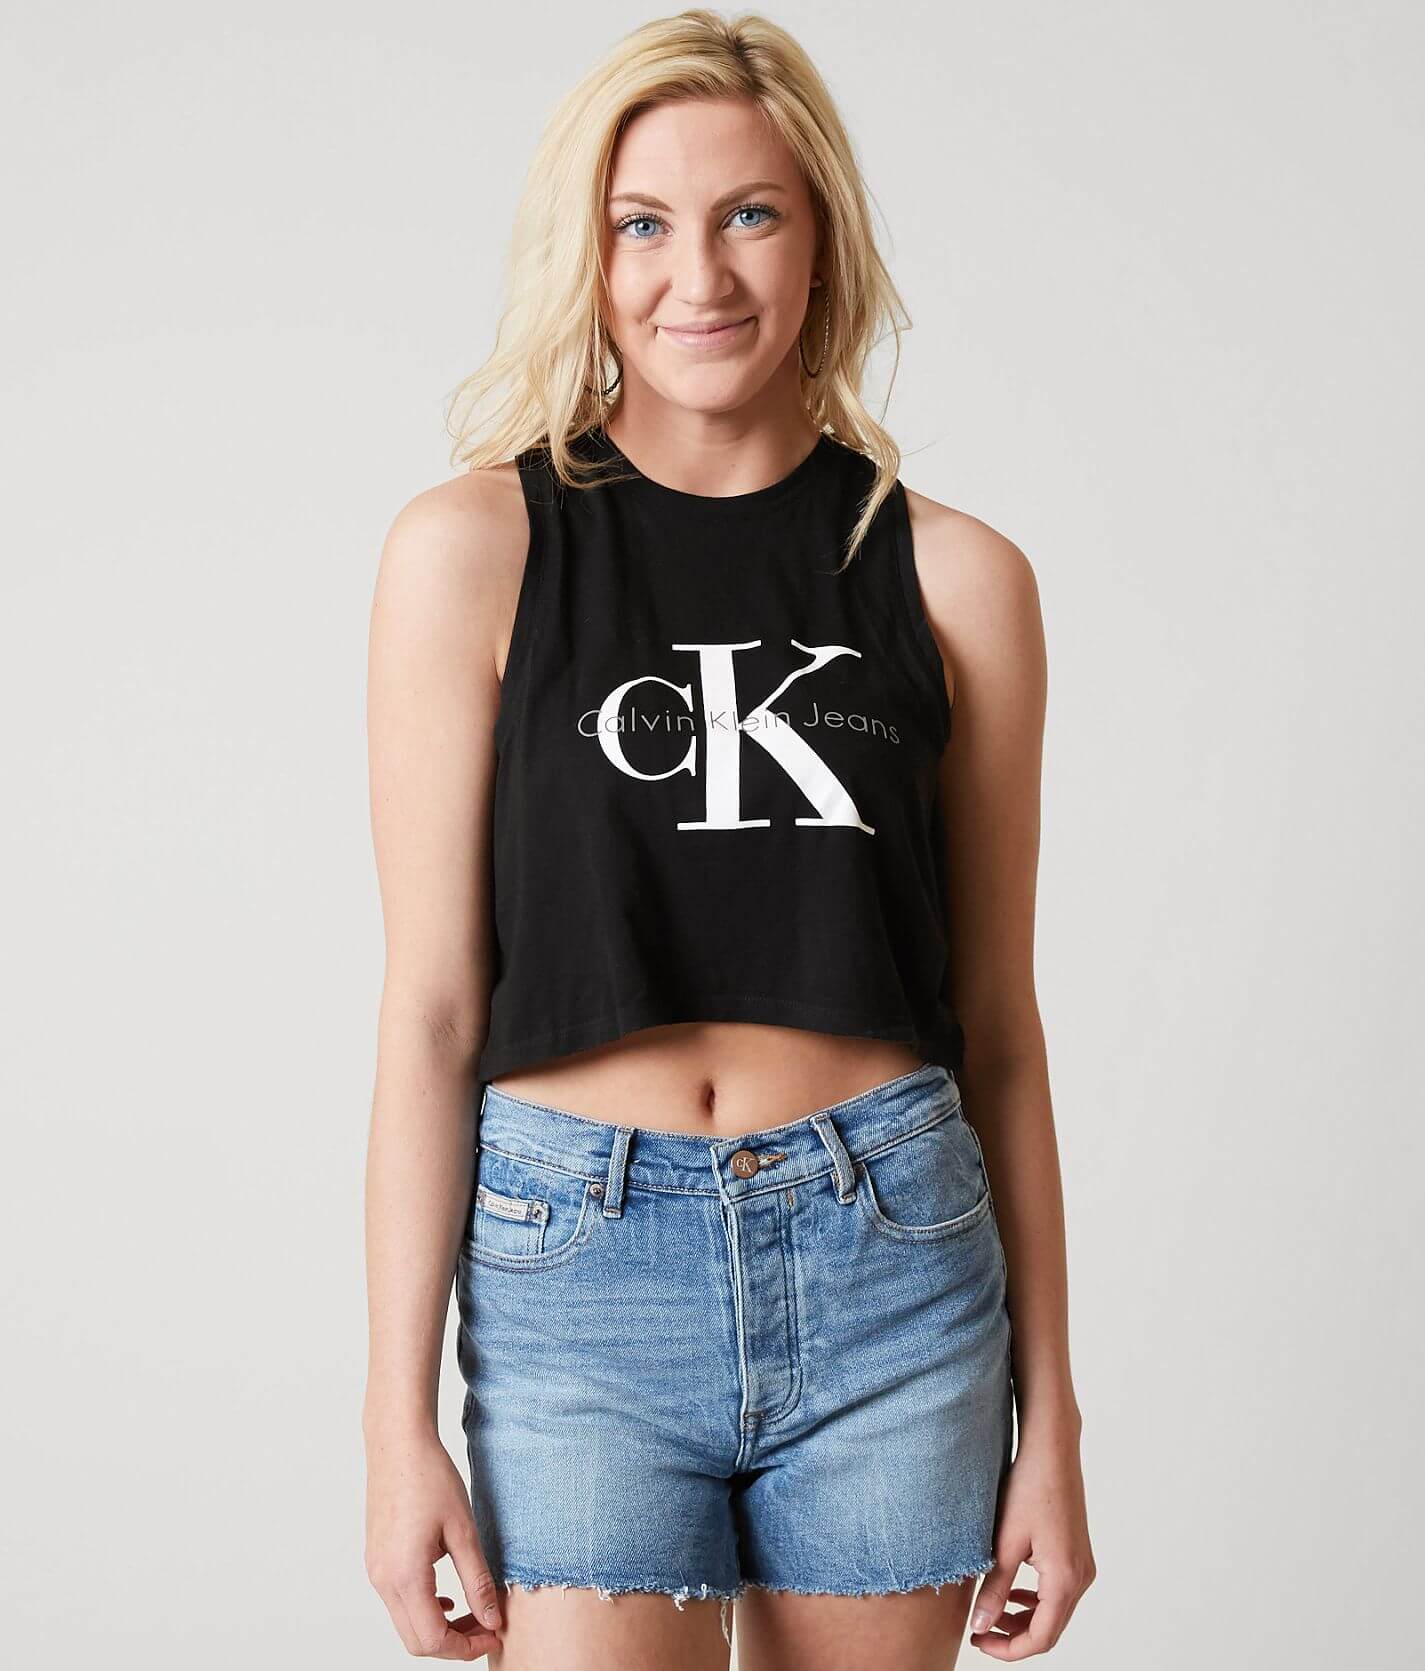 Calvin Klein CK Cropped Tank Top - Women's Tank Tops in Black | Buckle